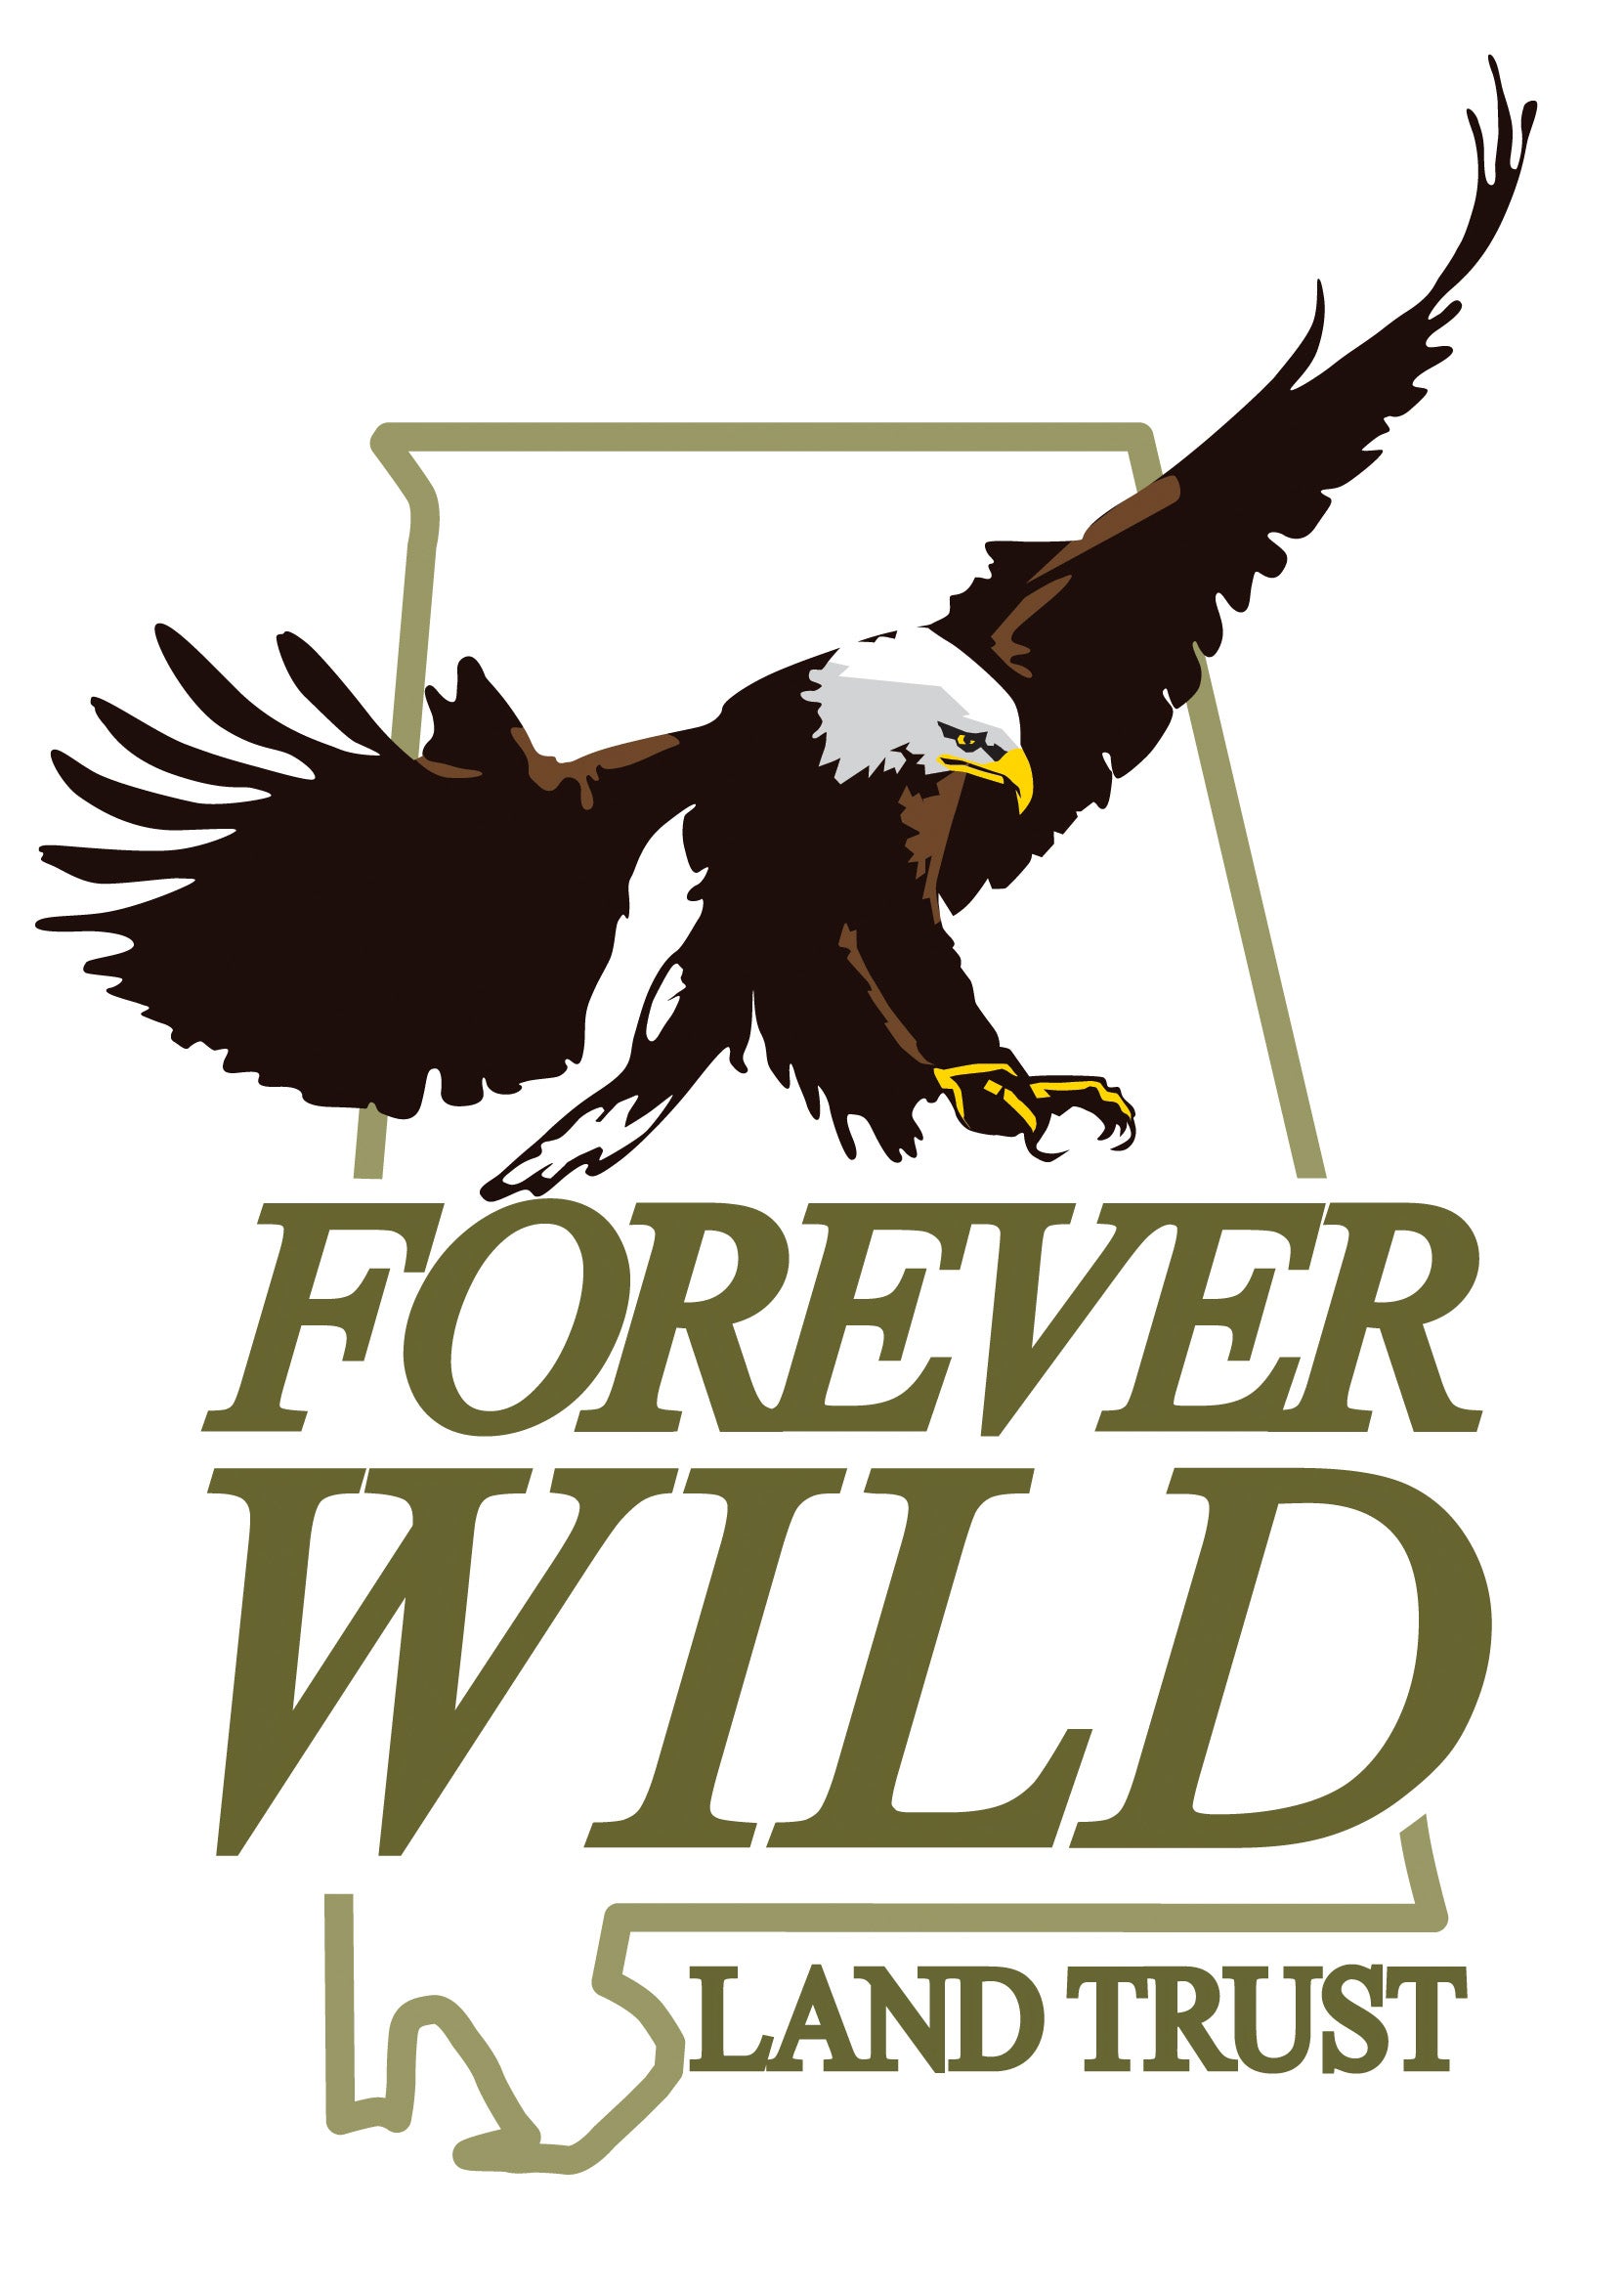 Alabama Forever Wild logo